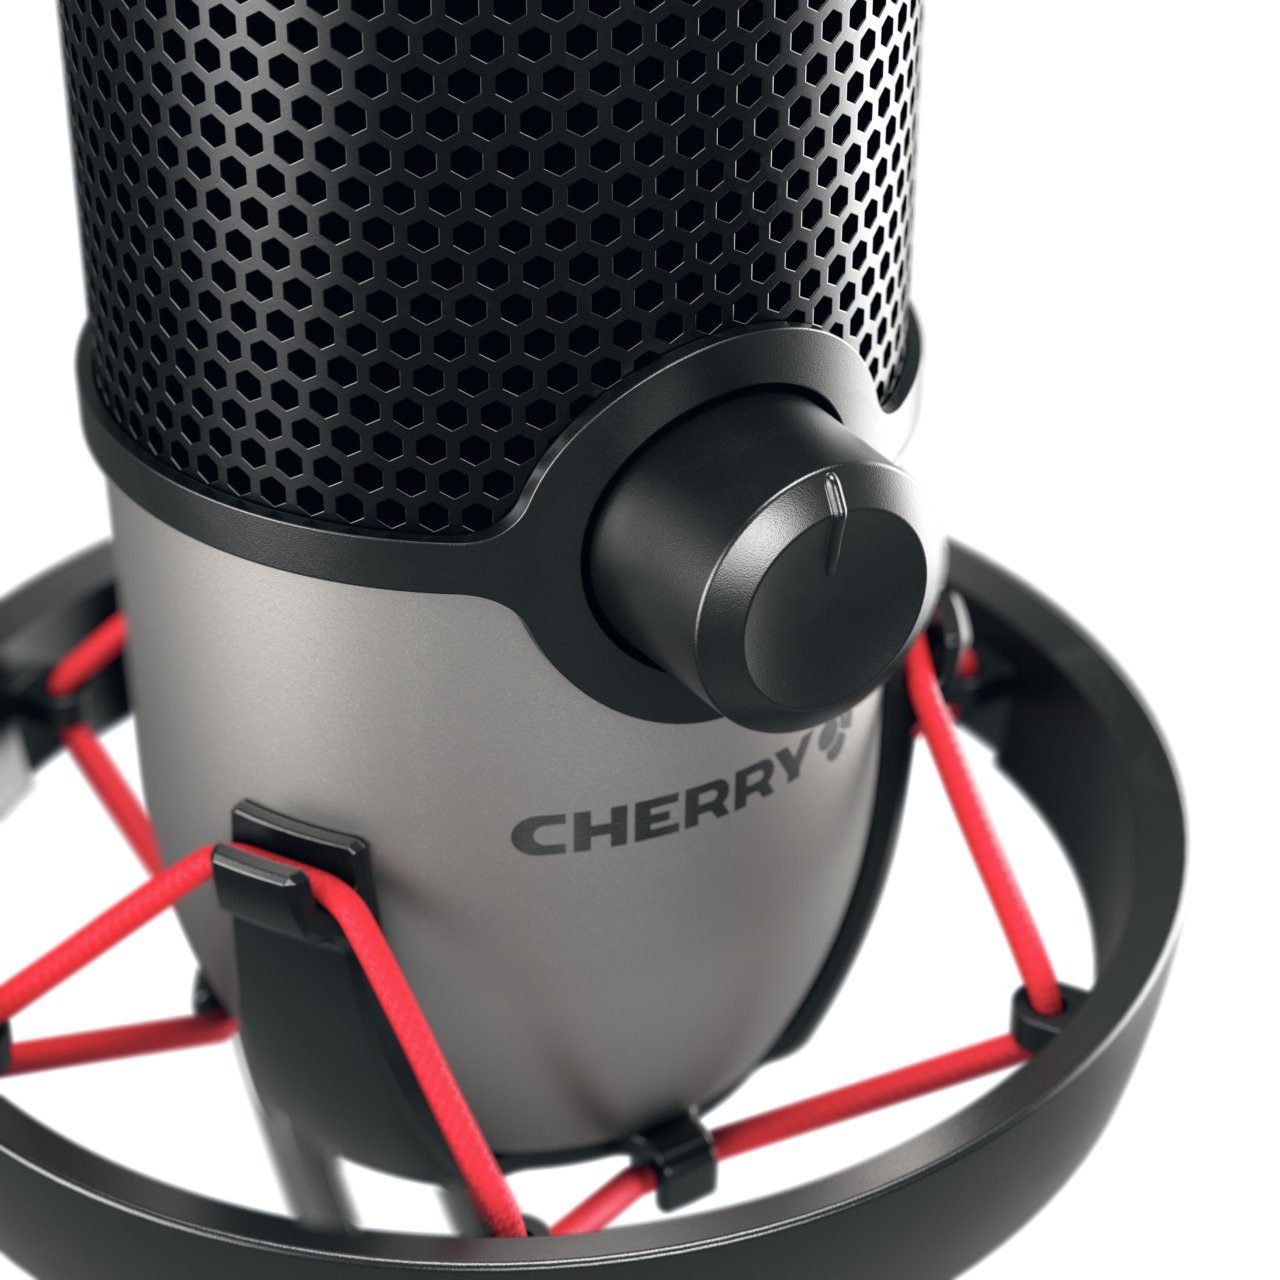 6.0 ADVANCED Streaming-Mikrofon UM Cherry